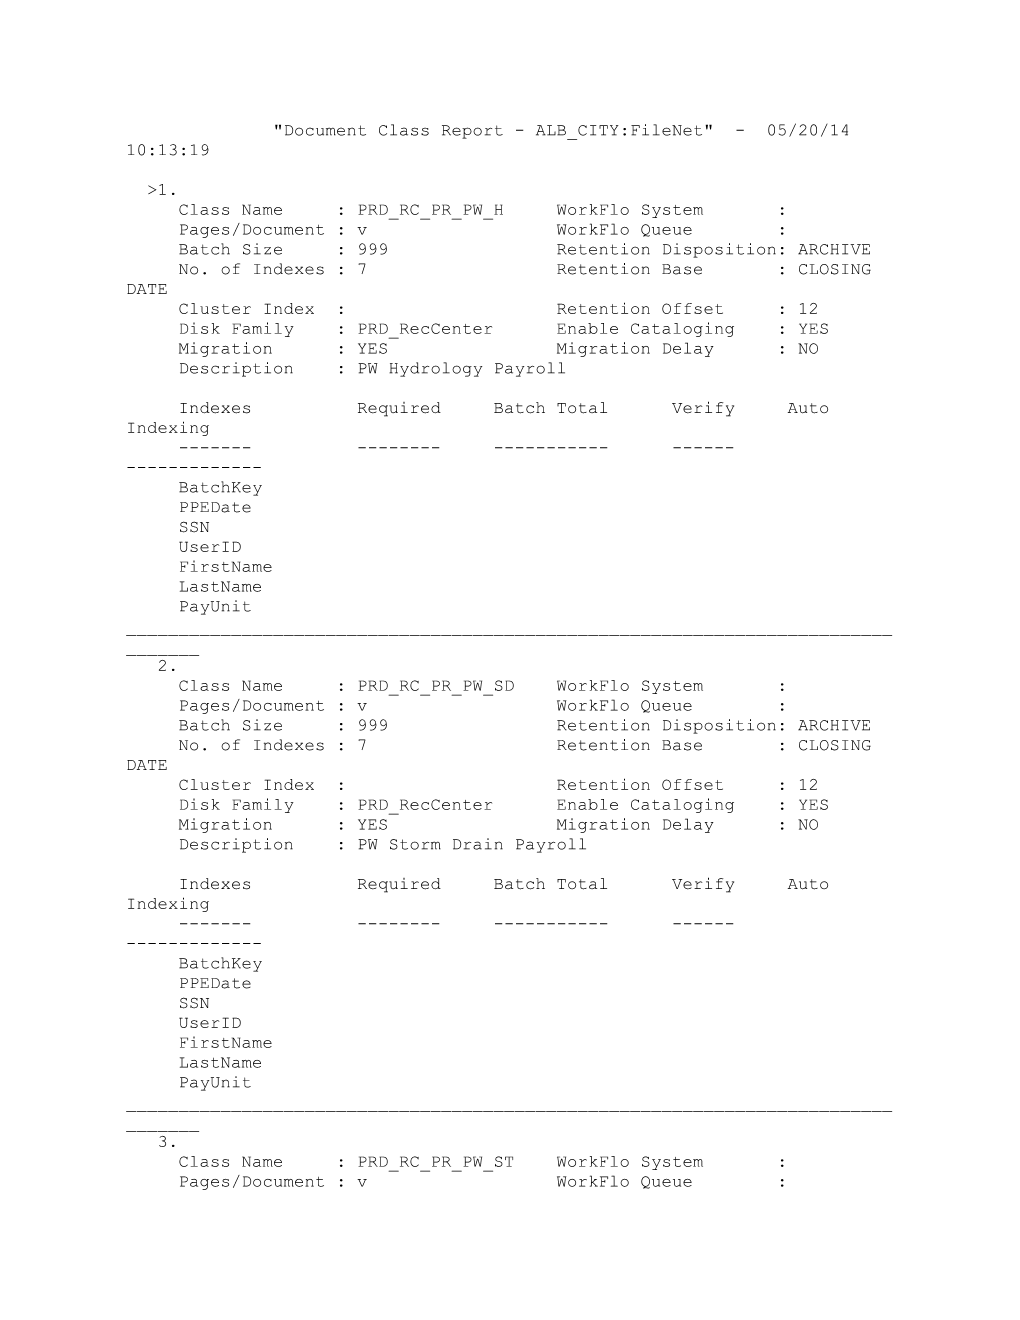 Document Class Report - ALB CITY:Filenet - 05/20/14 10:13:19